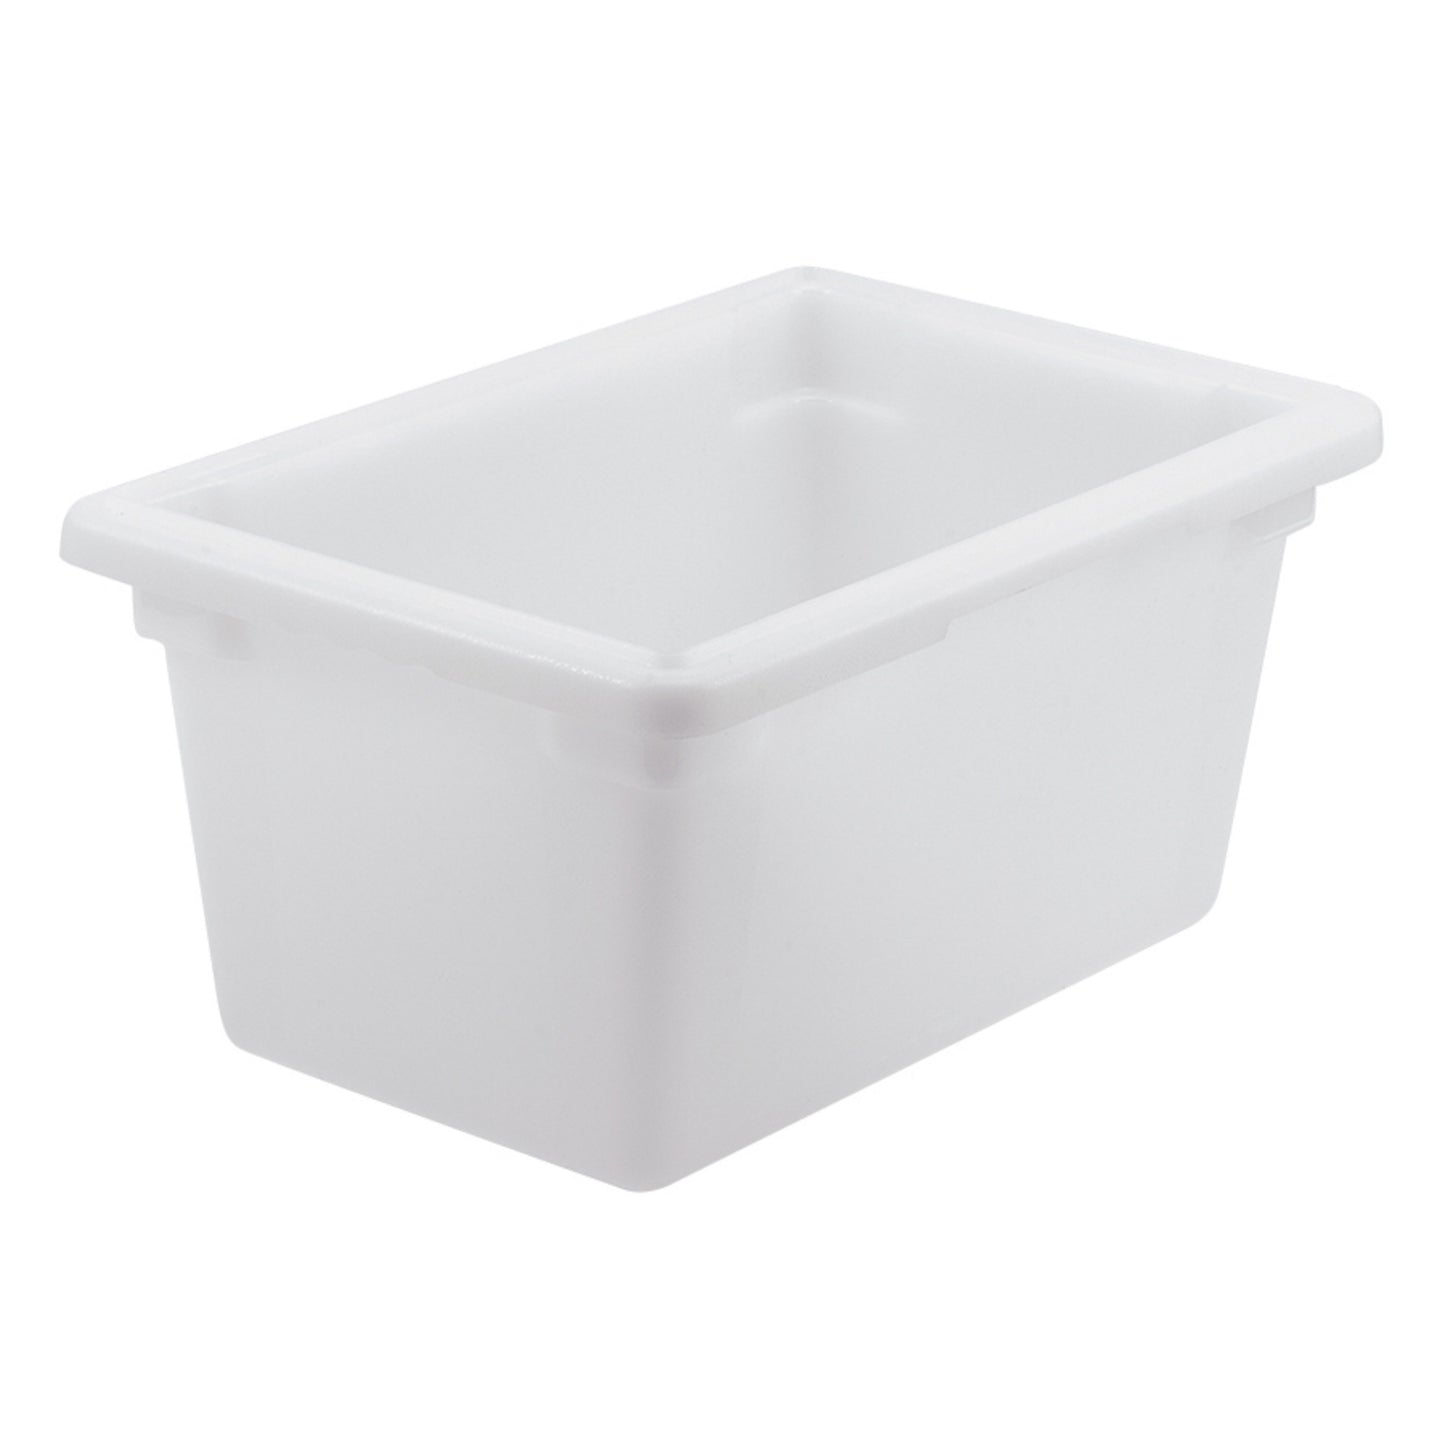 PFHW-9 - Food Storage Box, White Polypropylene - Half, 9"